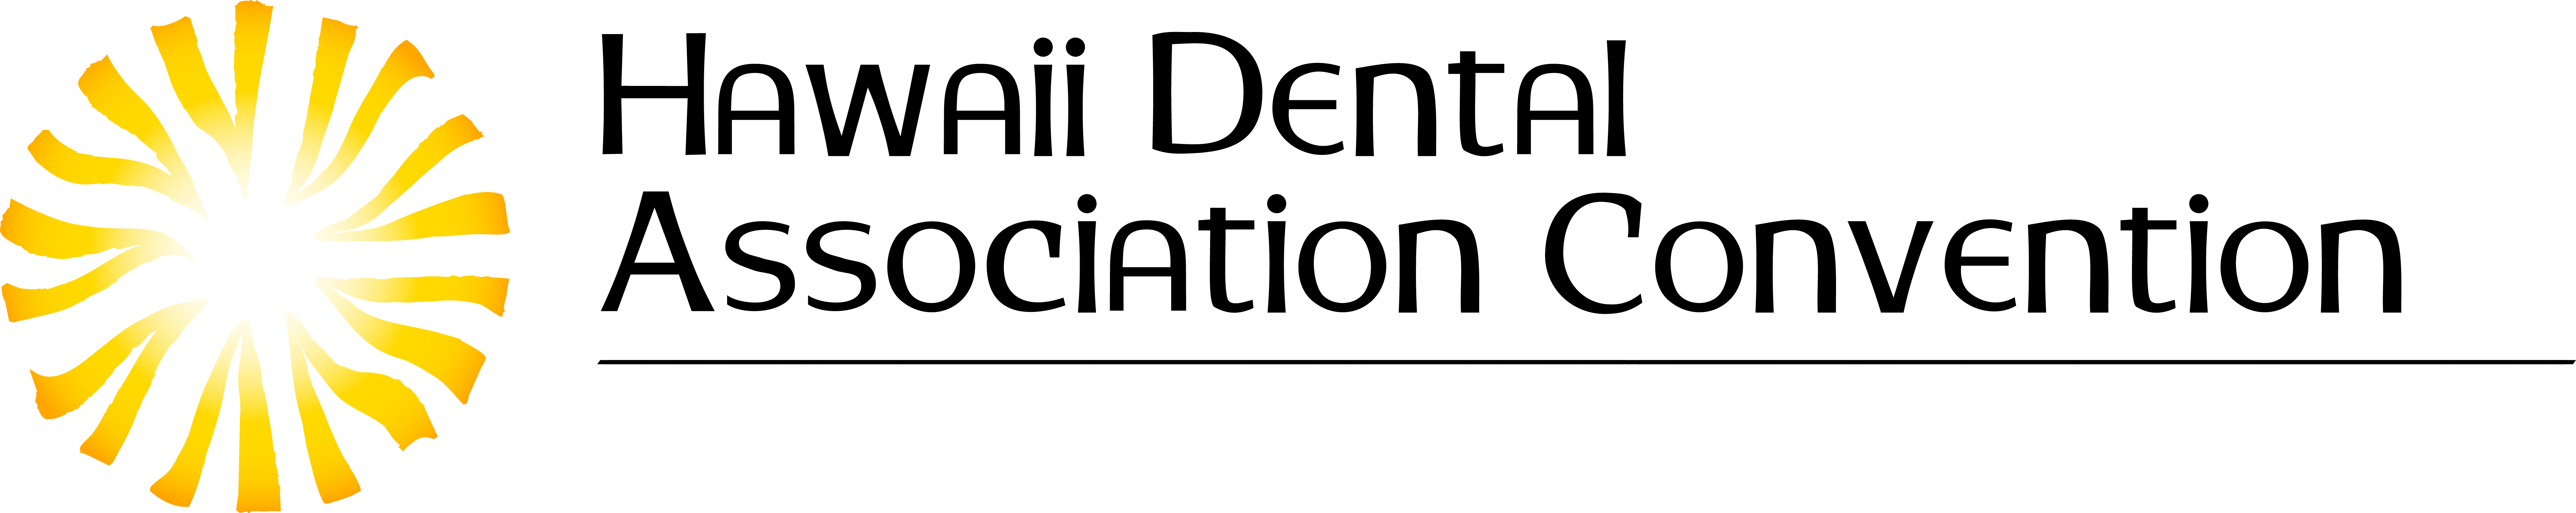 Hawaii Dental Association Convention